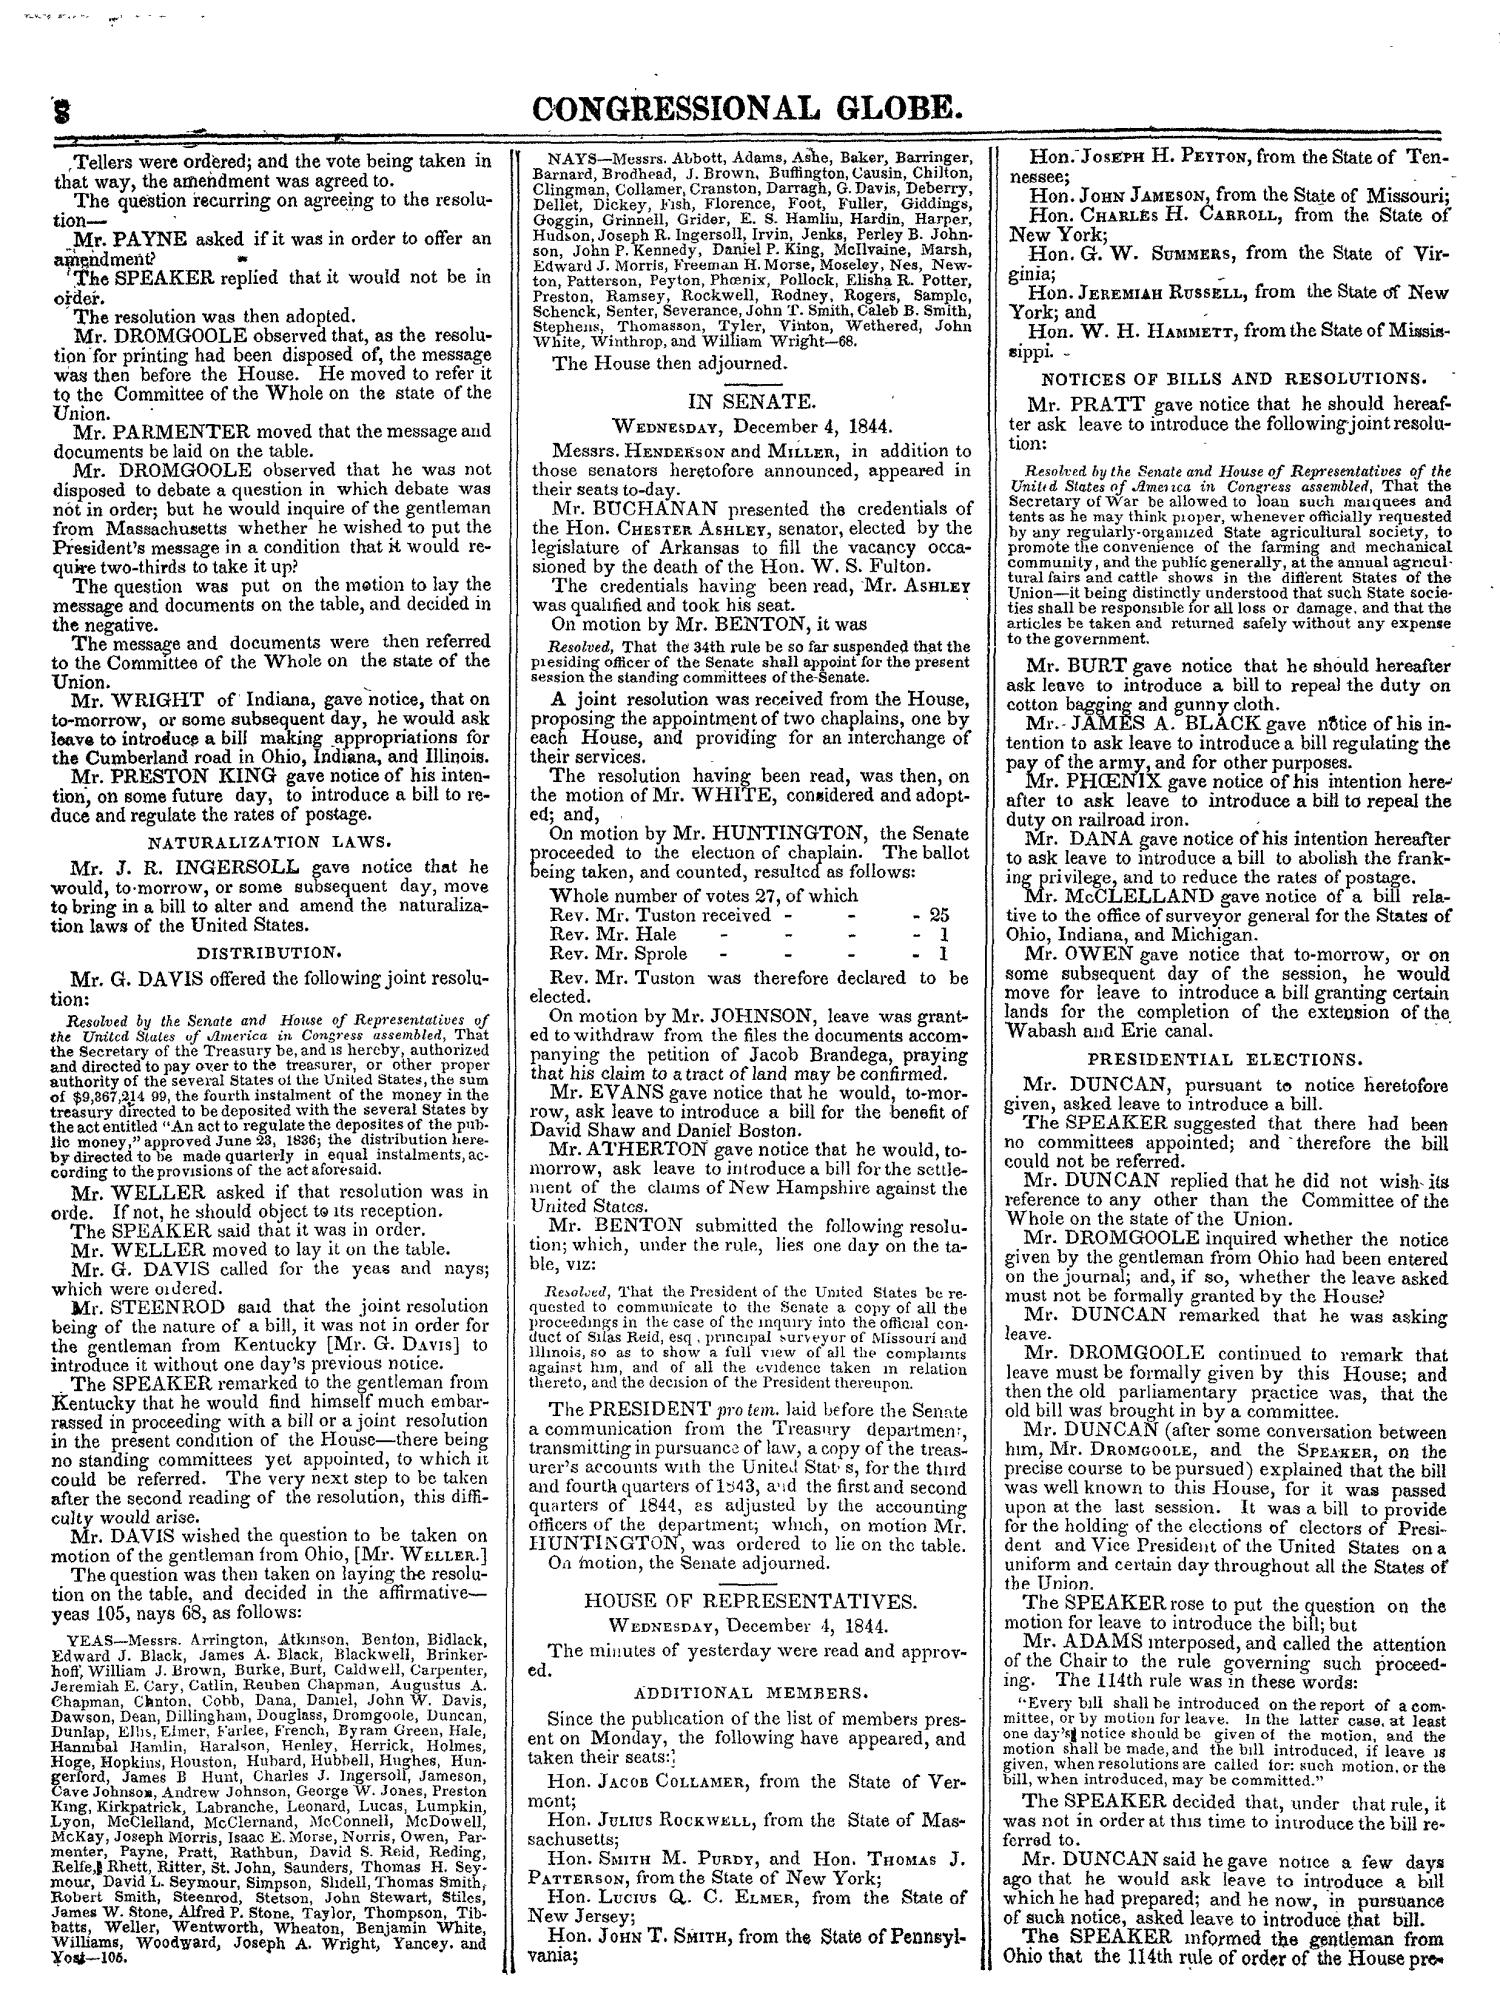 The Congressional Globe, Volume 14: Twenty-Eighth Congress, Second Session
                                                
                                                    8
                                                